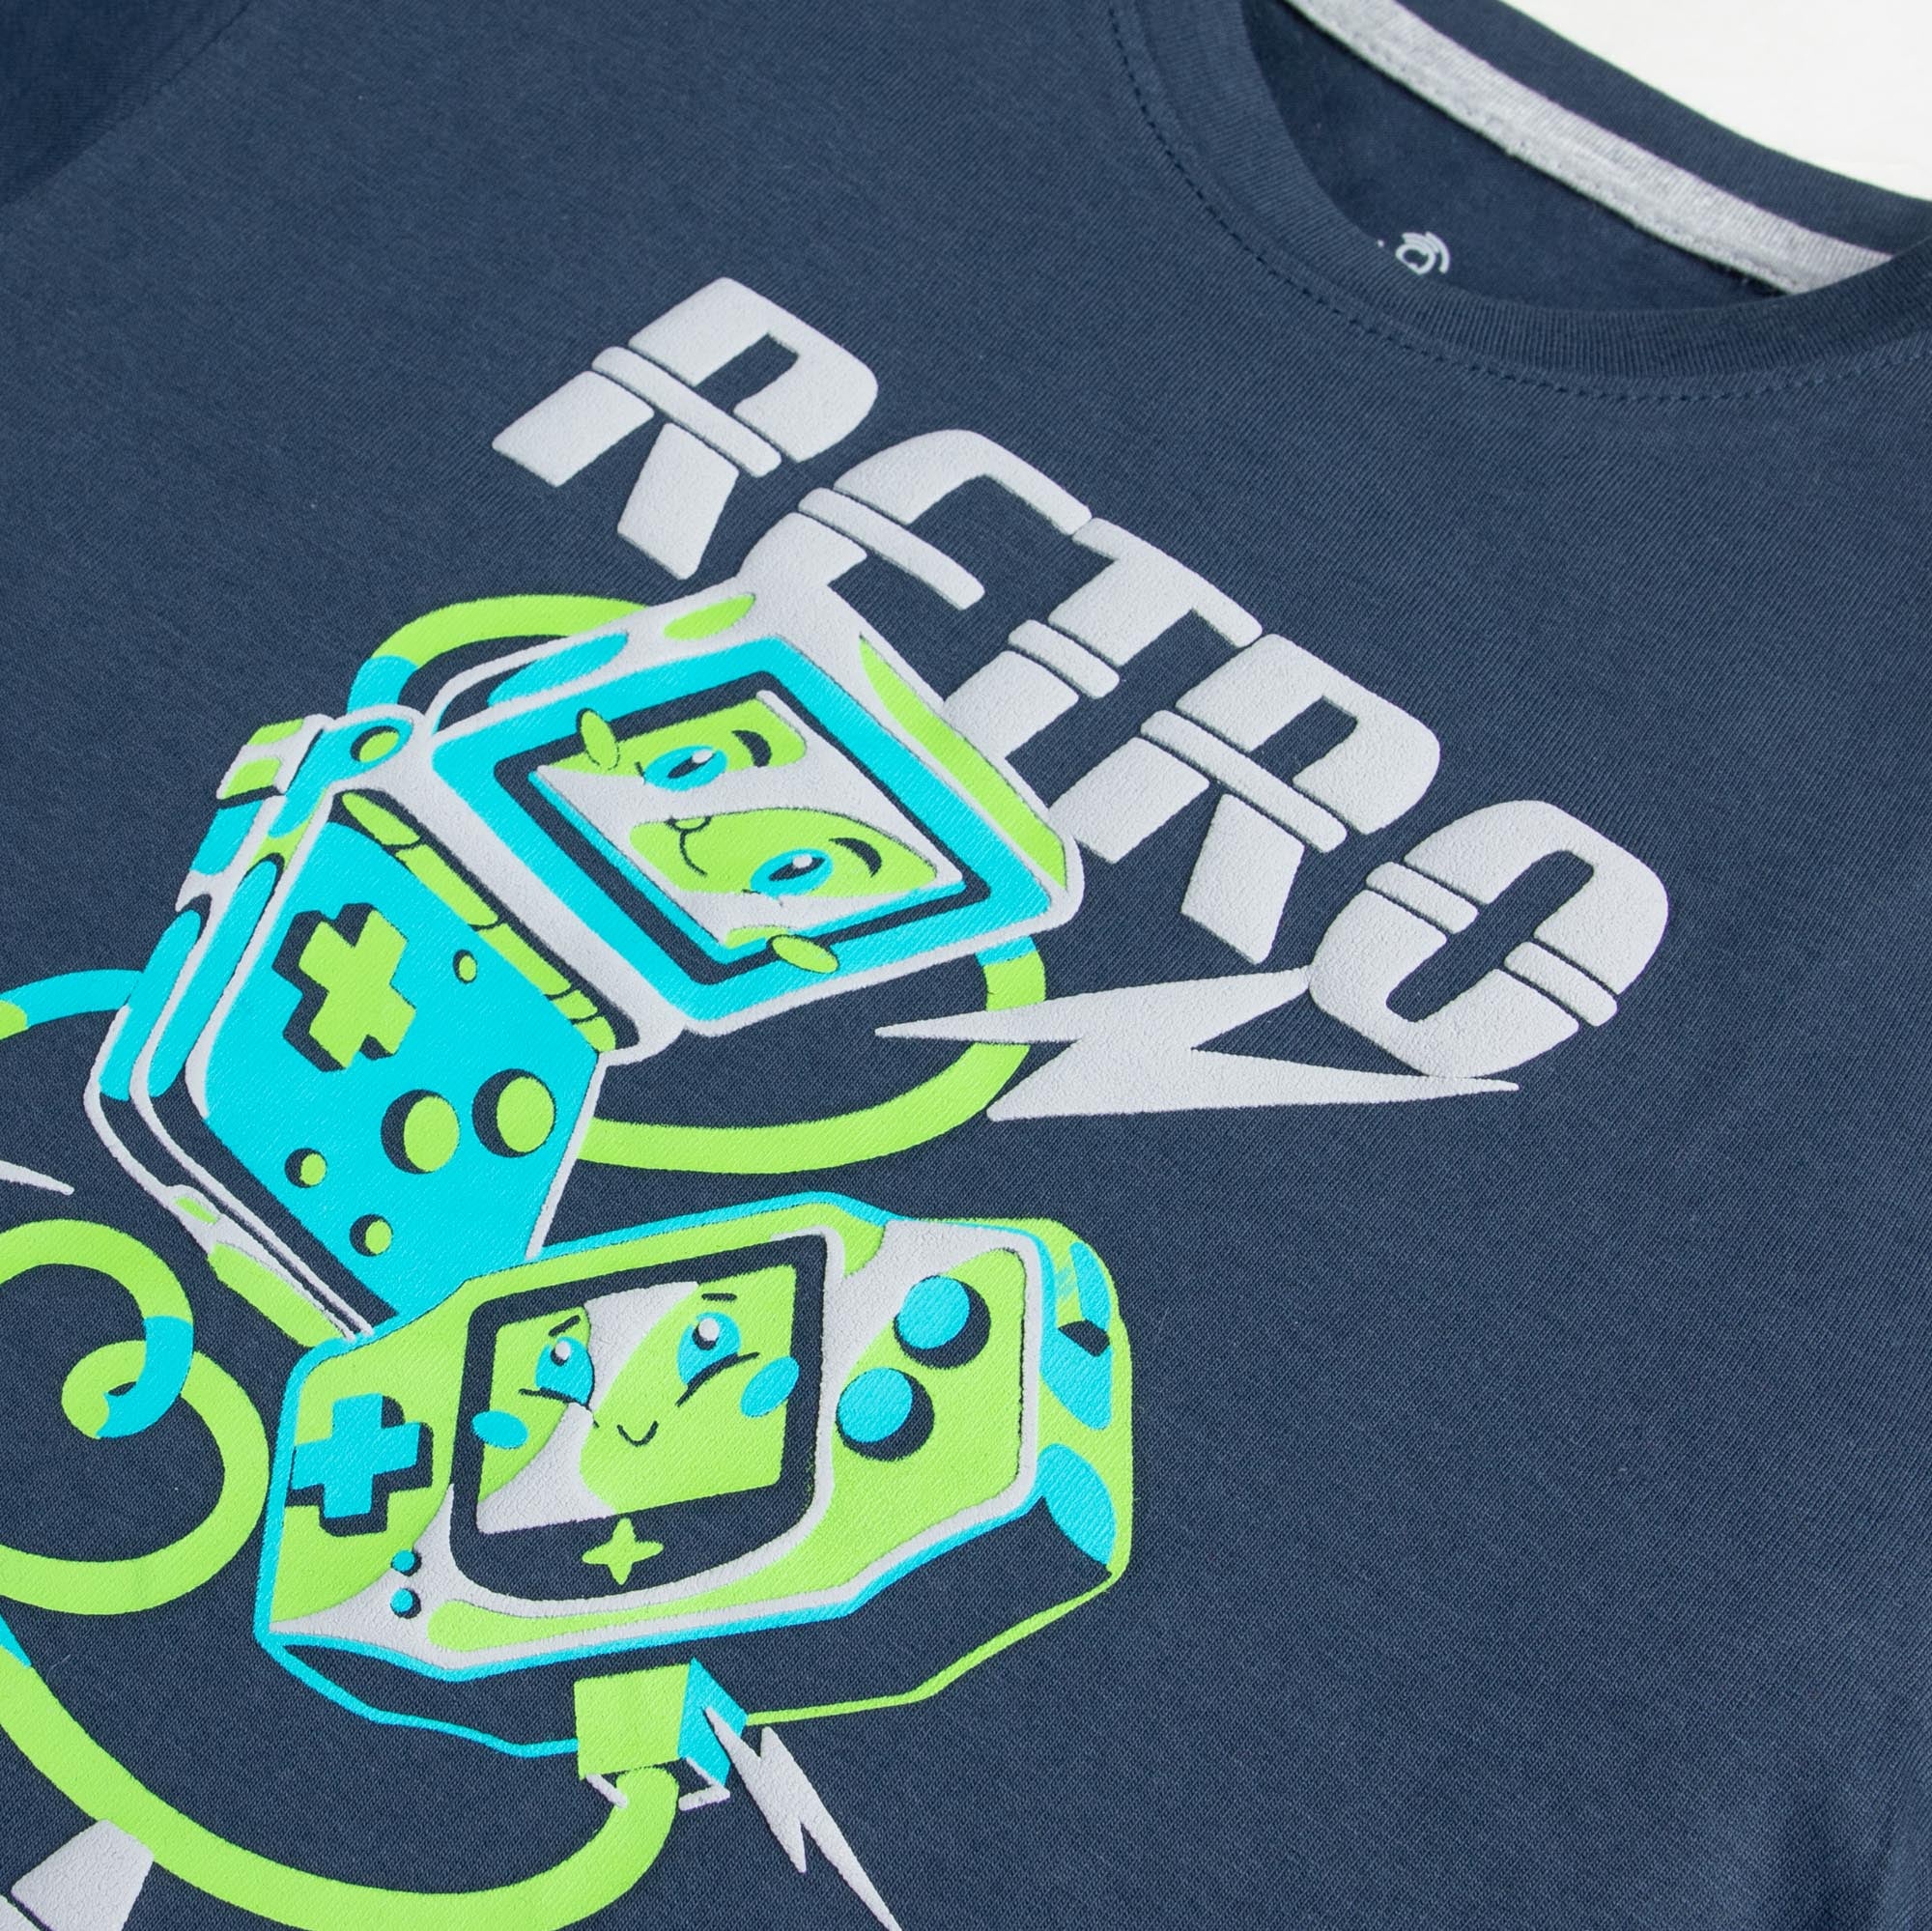 Retro Game T-shirt